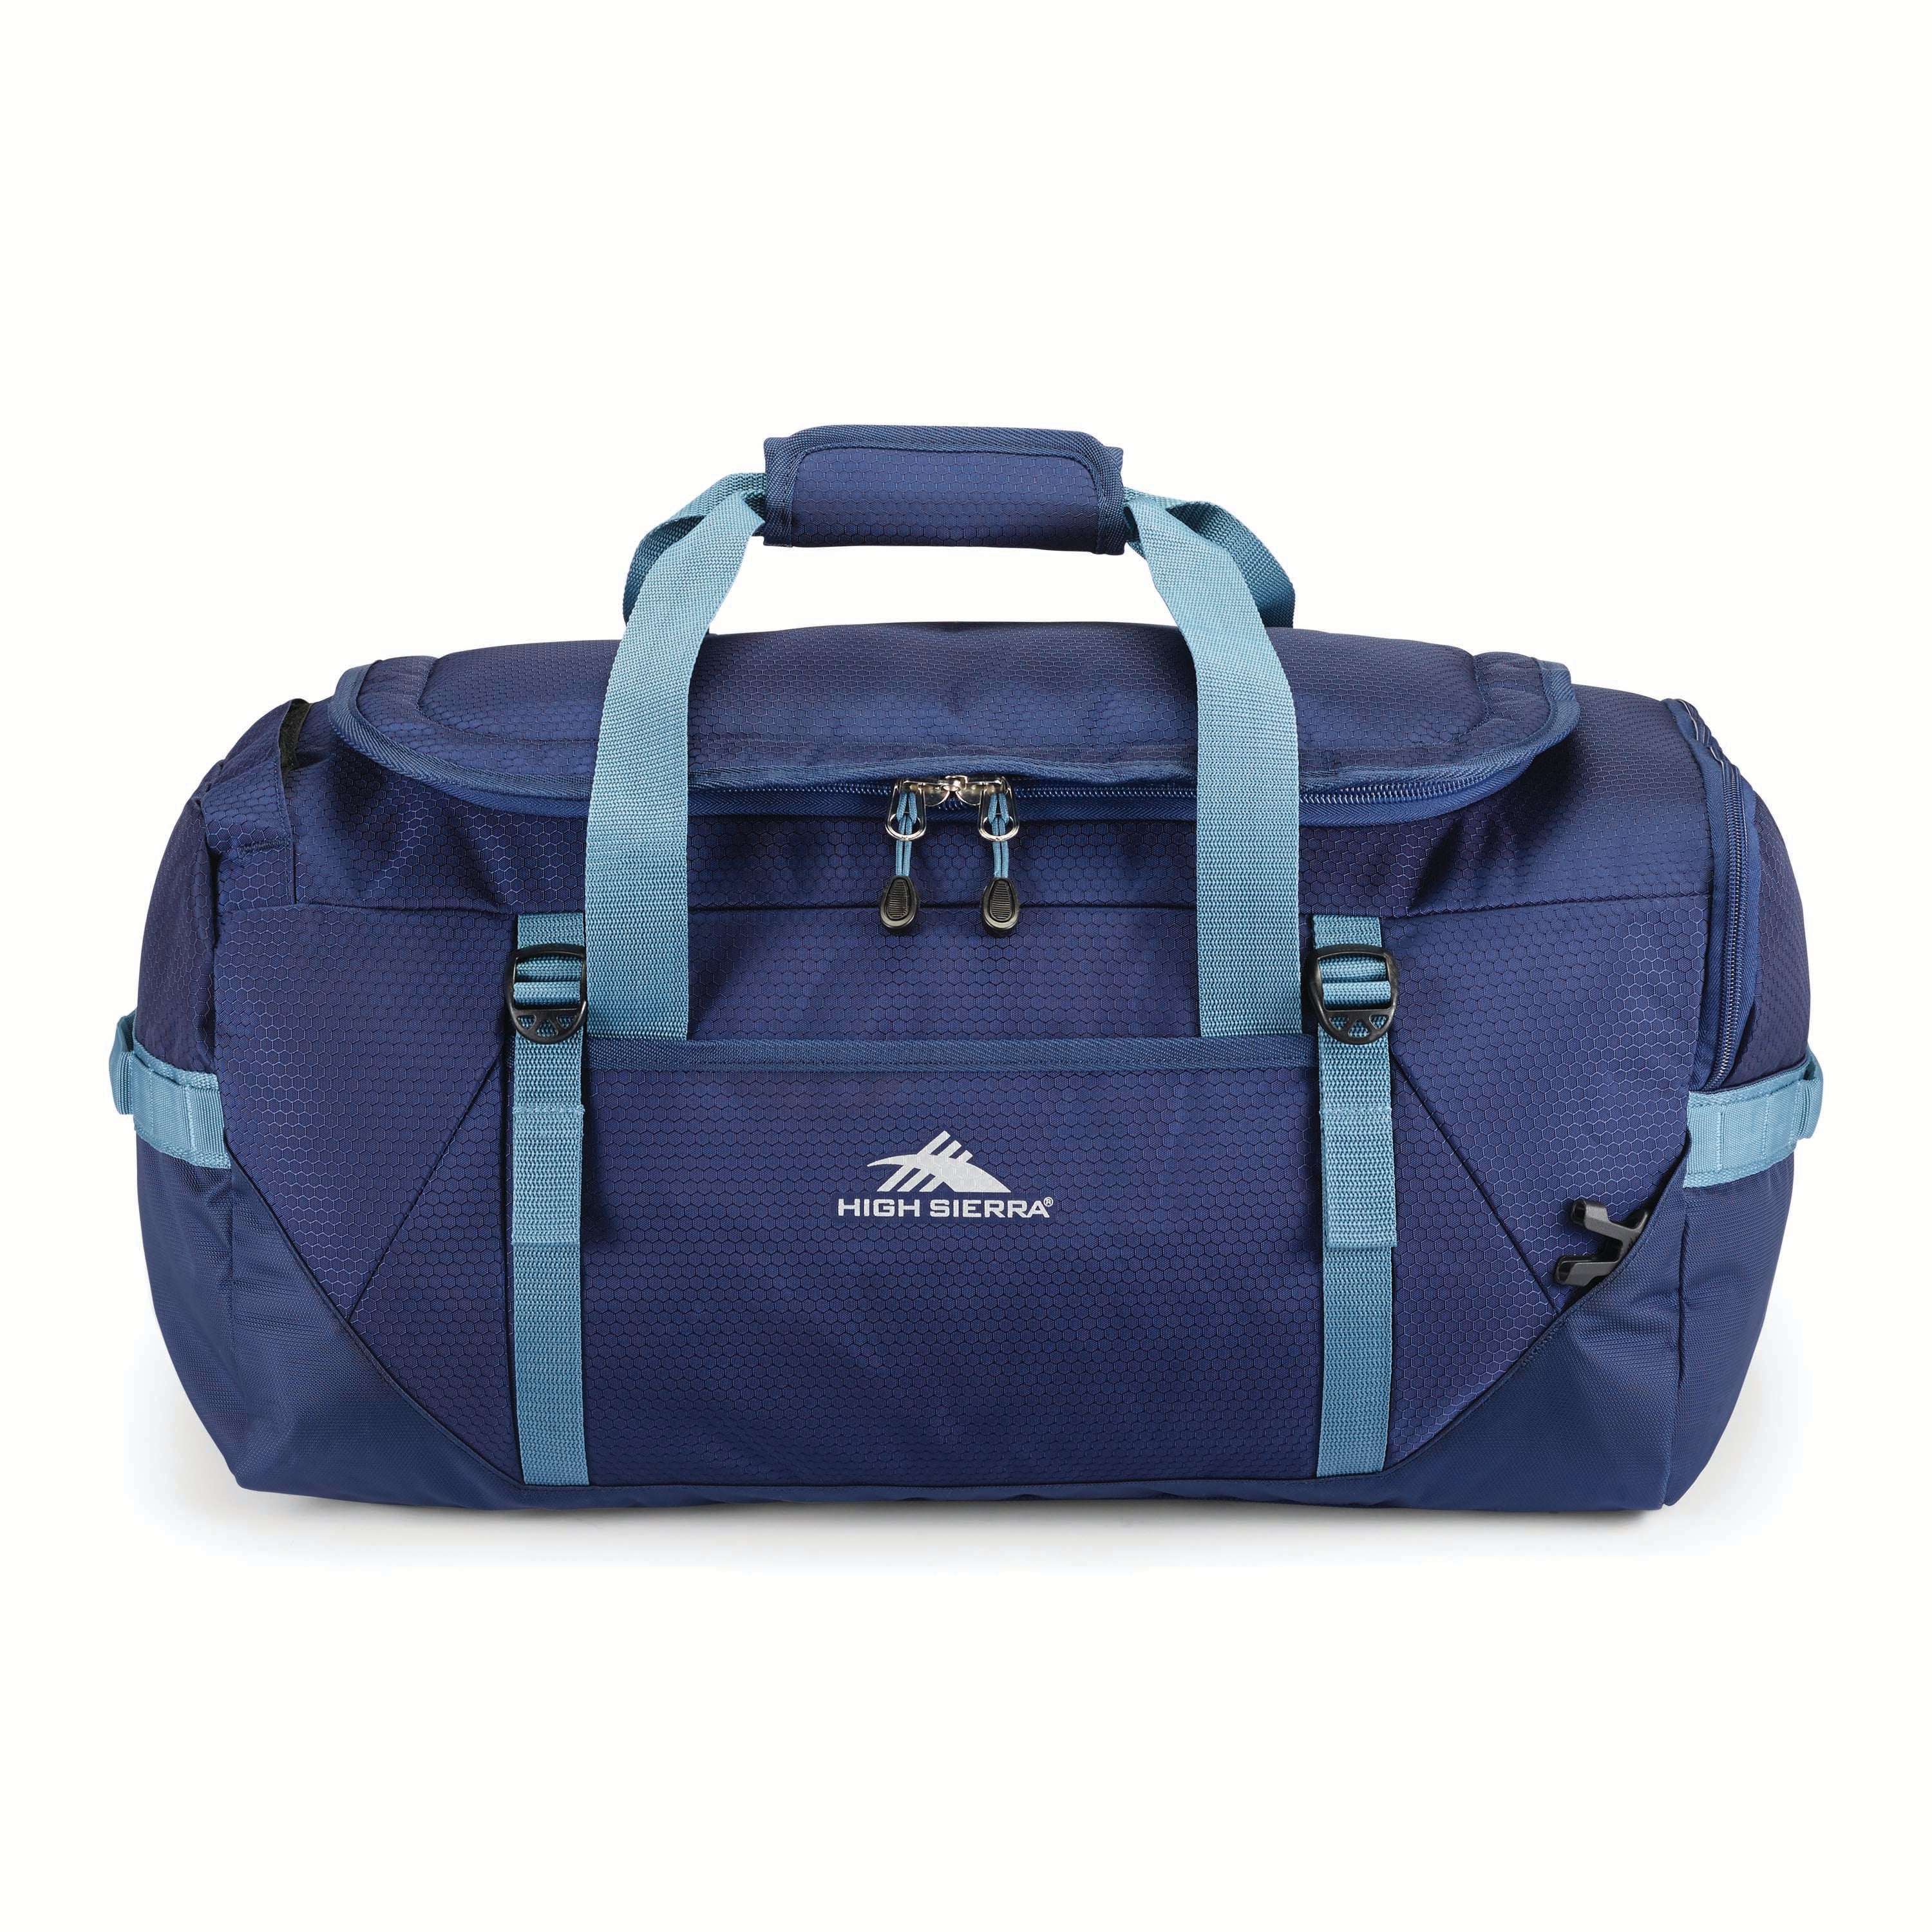 High Sierra - Convertable Backpack-Duffle - Navy-Graphite Blue-2